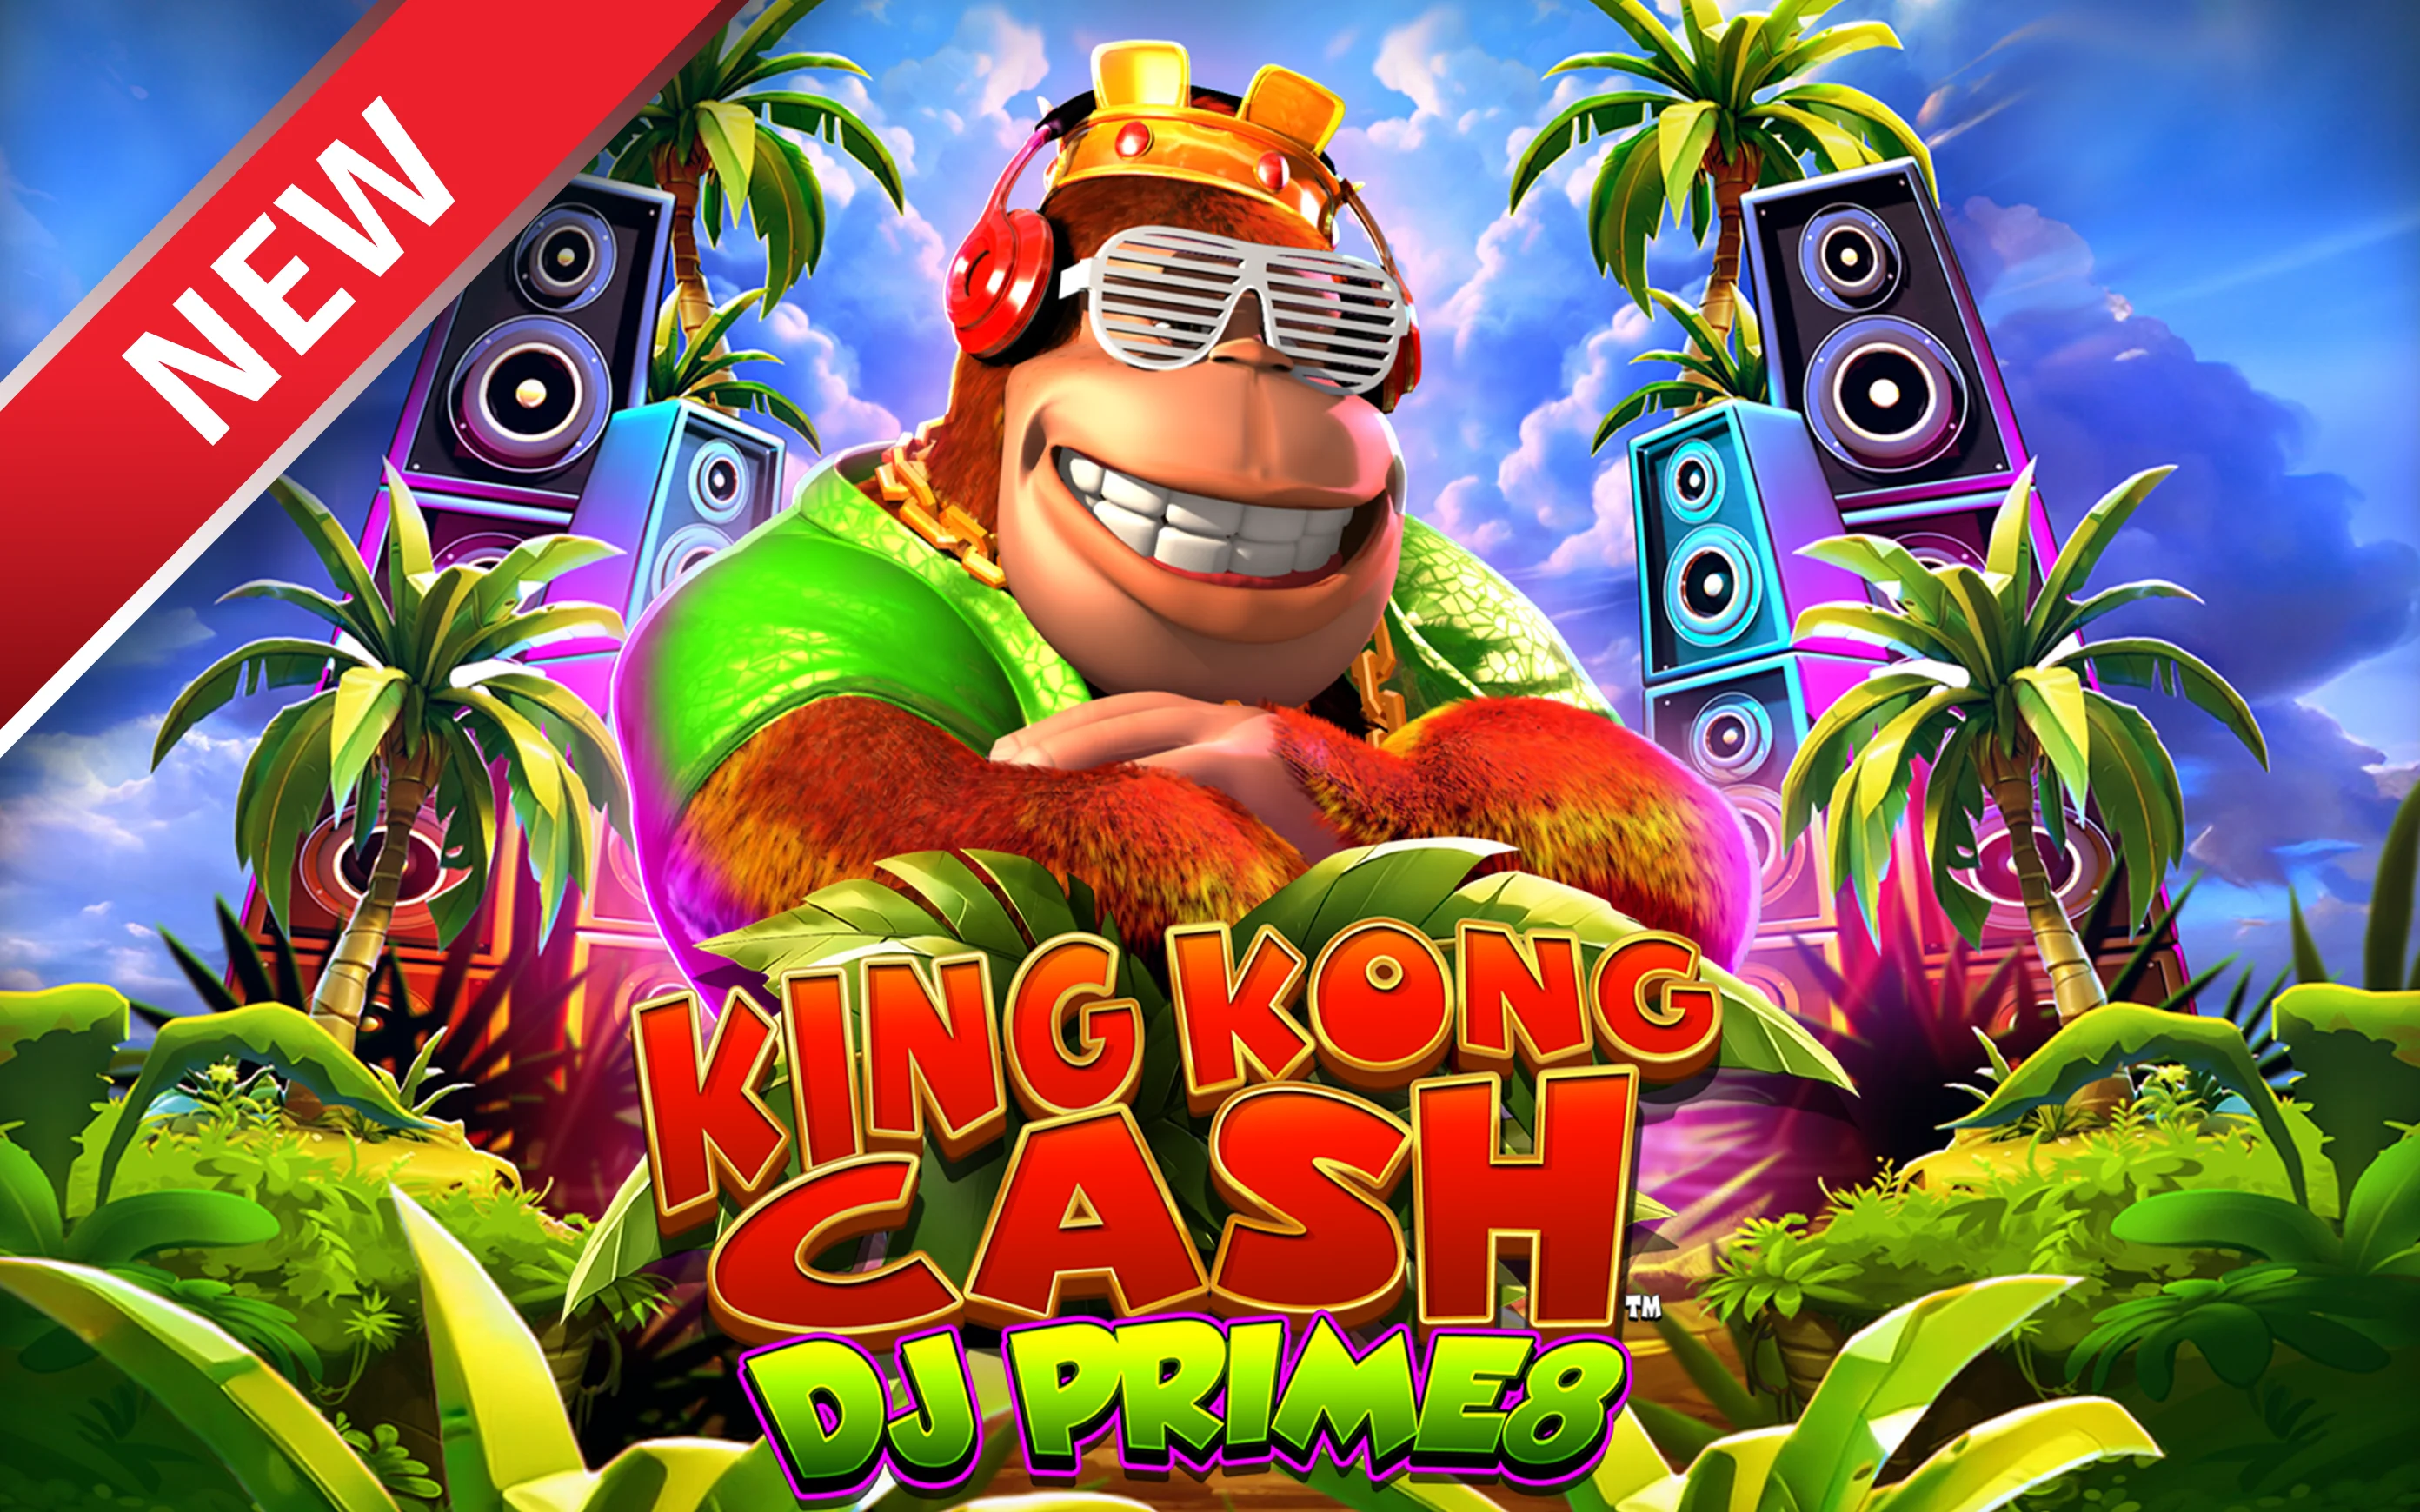 Joacă King Kong Cash DJ Prime8 în cazinoul online Starcasino.be